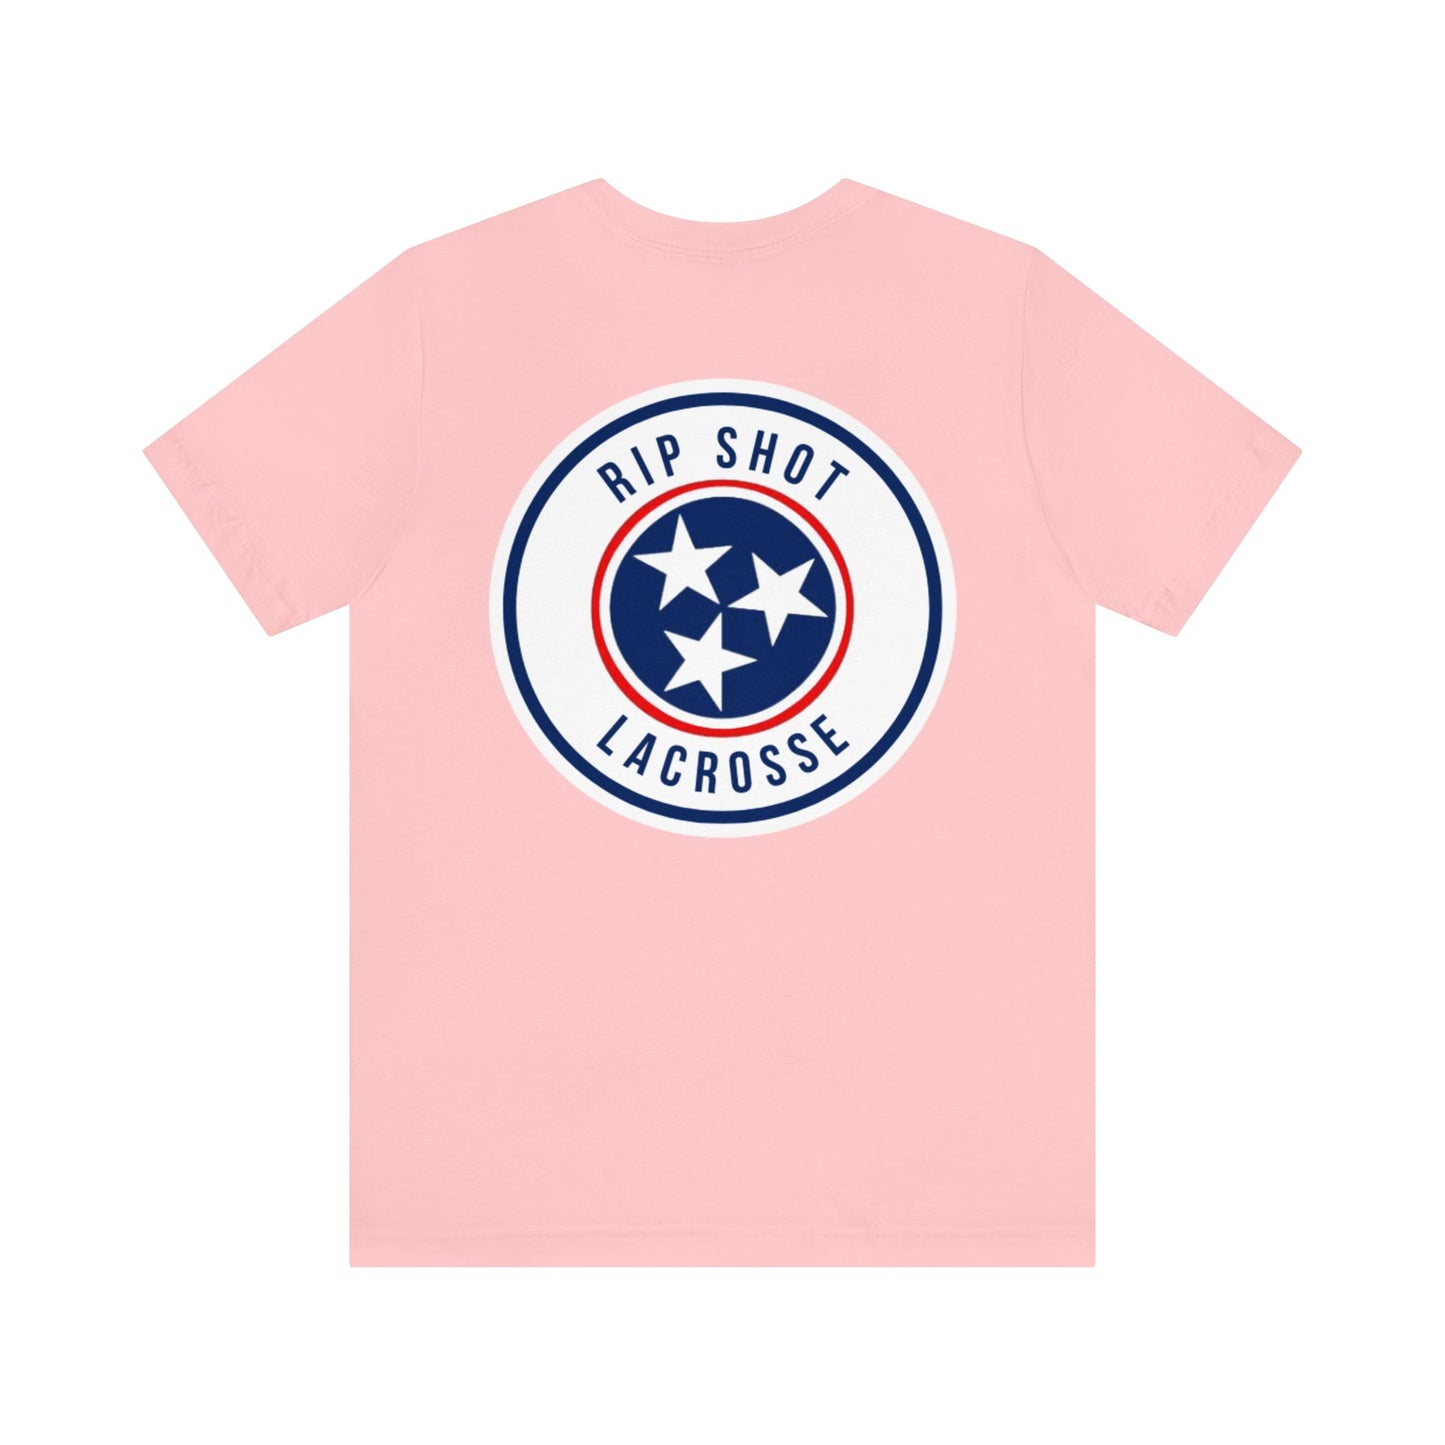 Rip Shot Tennessee T-Shirt